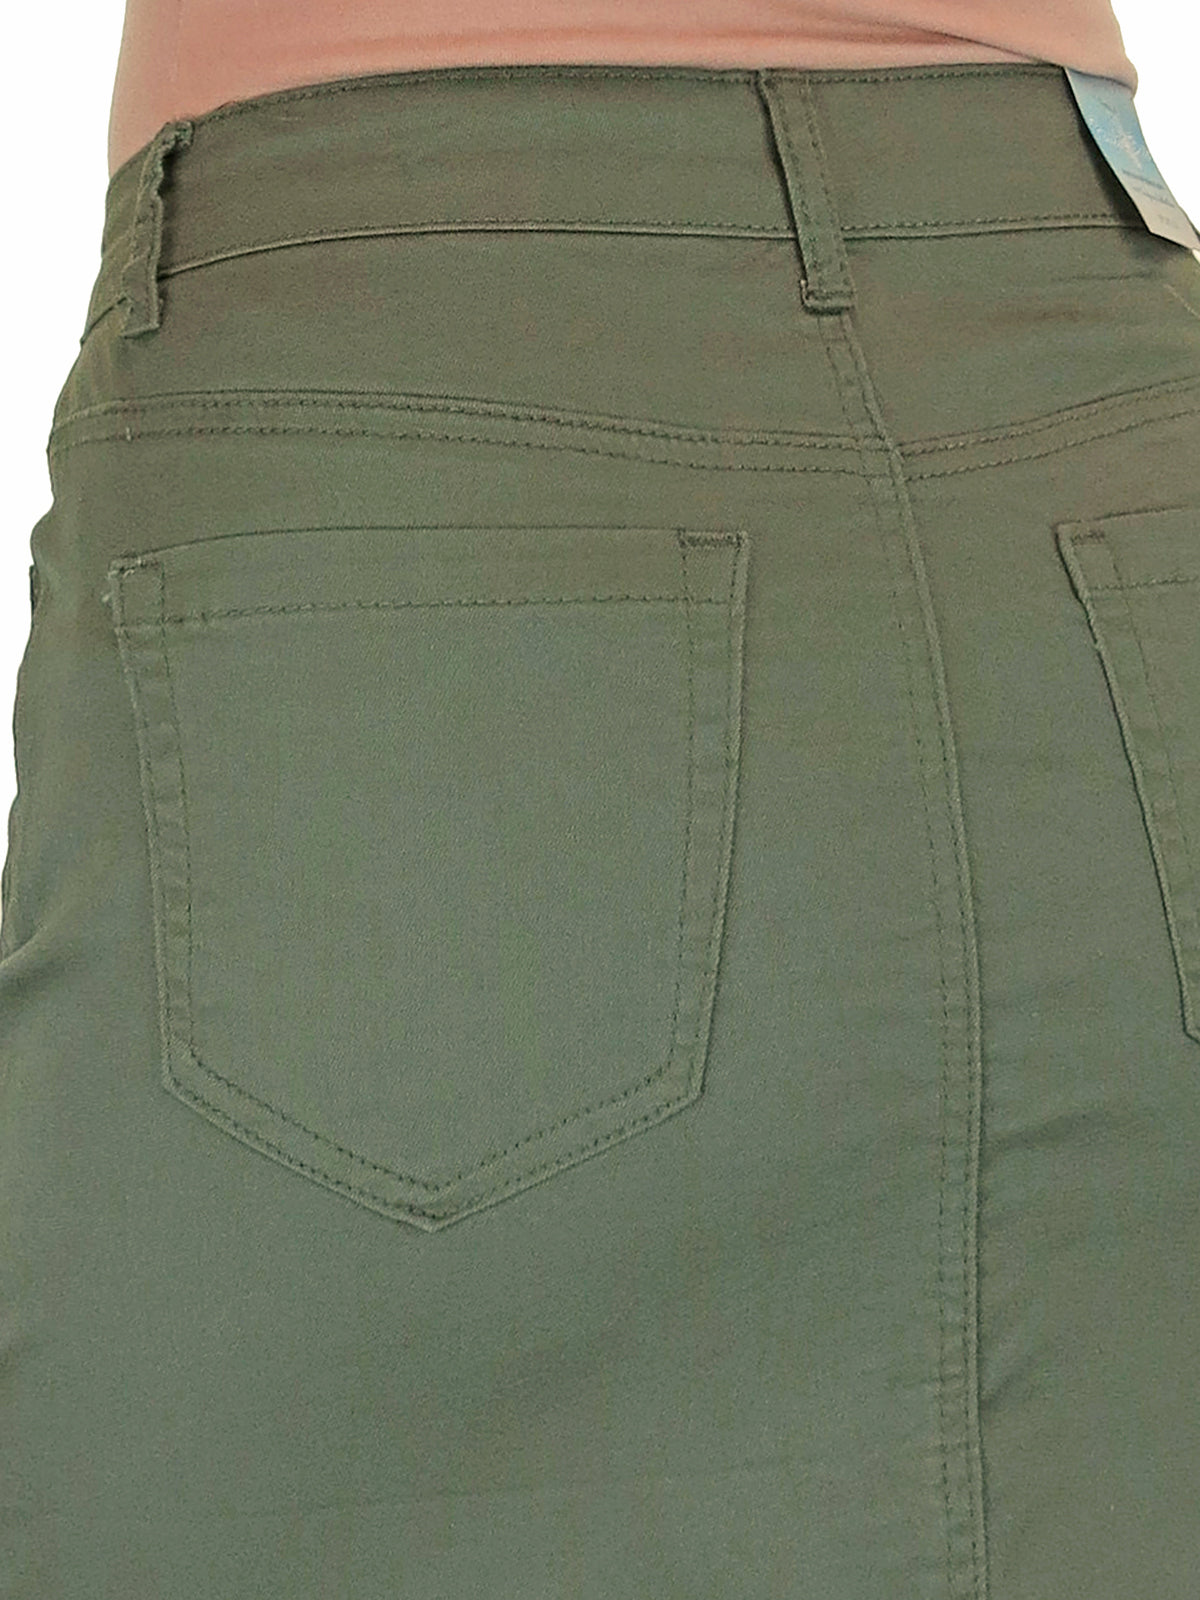 Women's Knee Length Stretch Chino Pencil Skirt Khaki Green